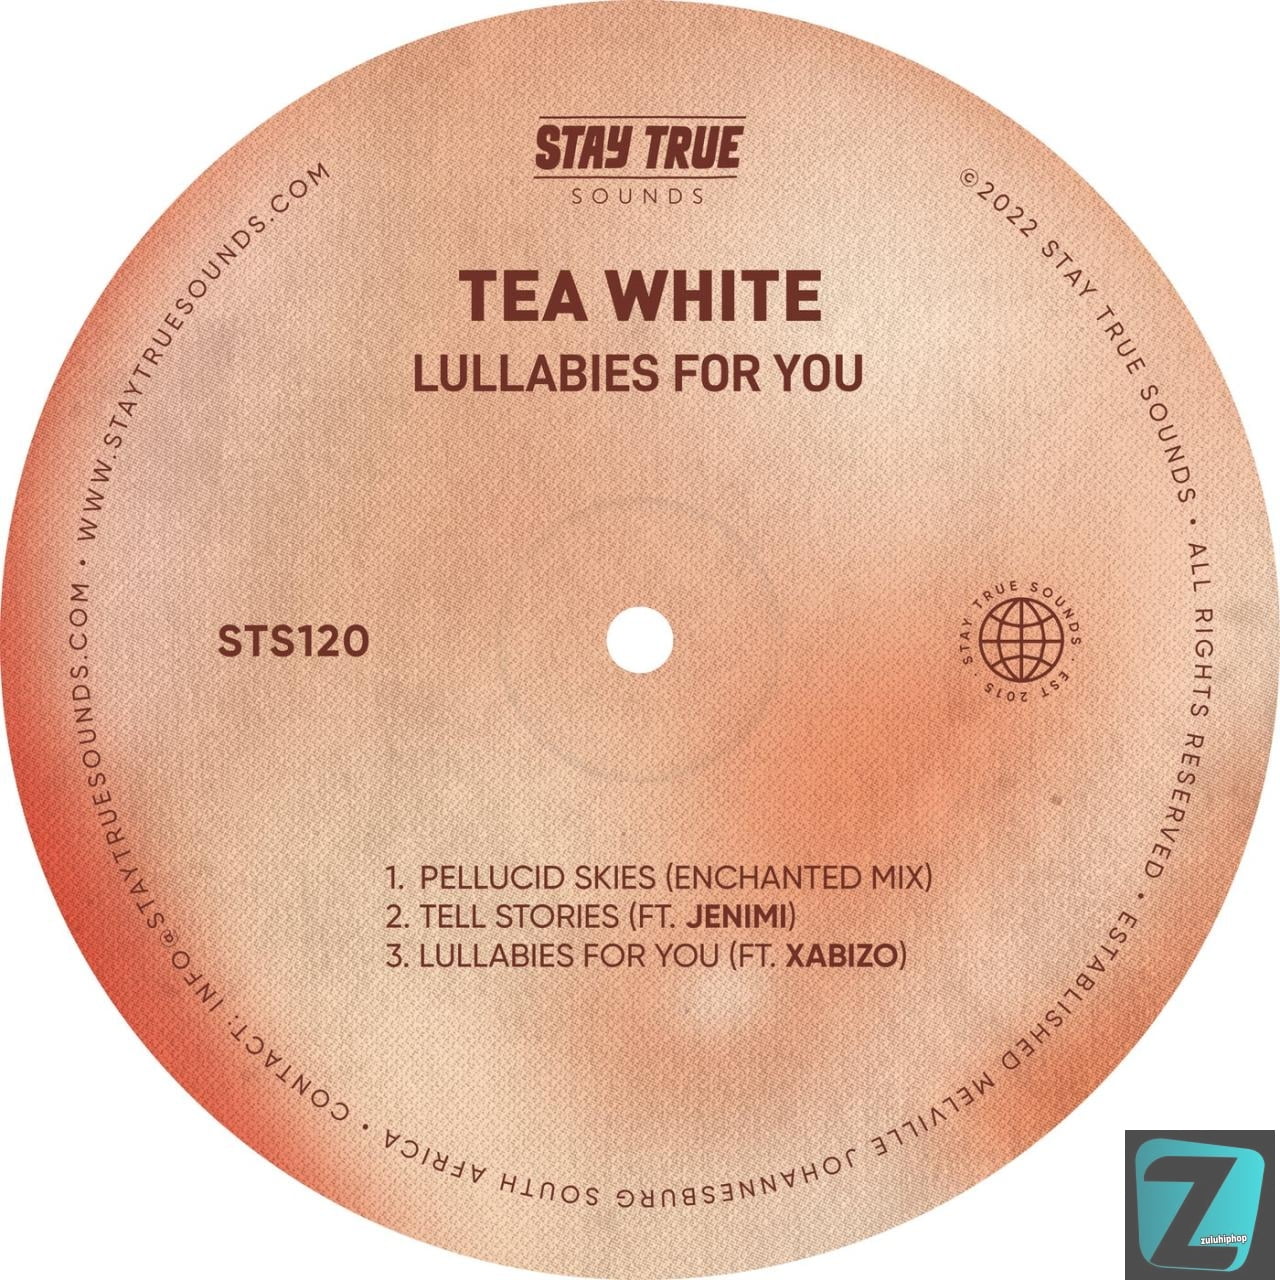 Tea White Ft. Xabizo – Lullabies For You